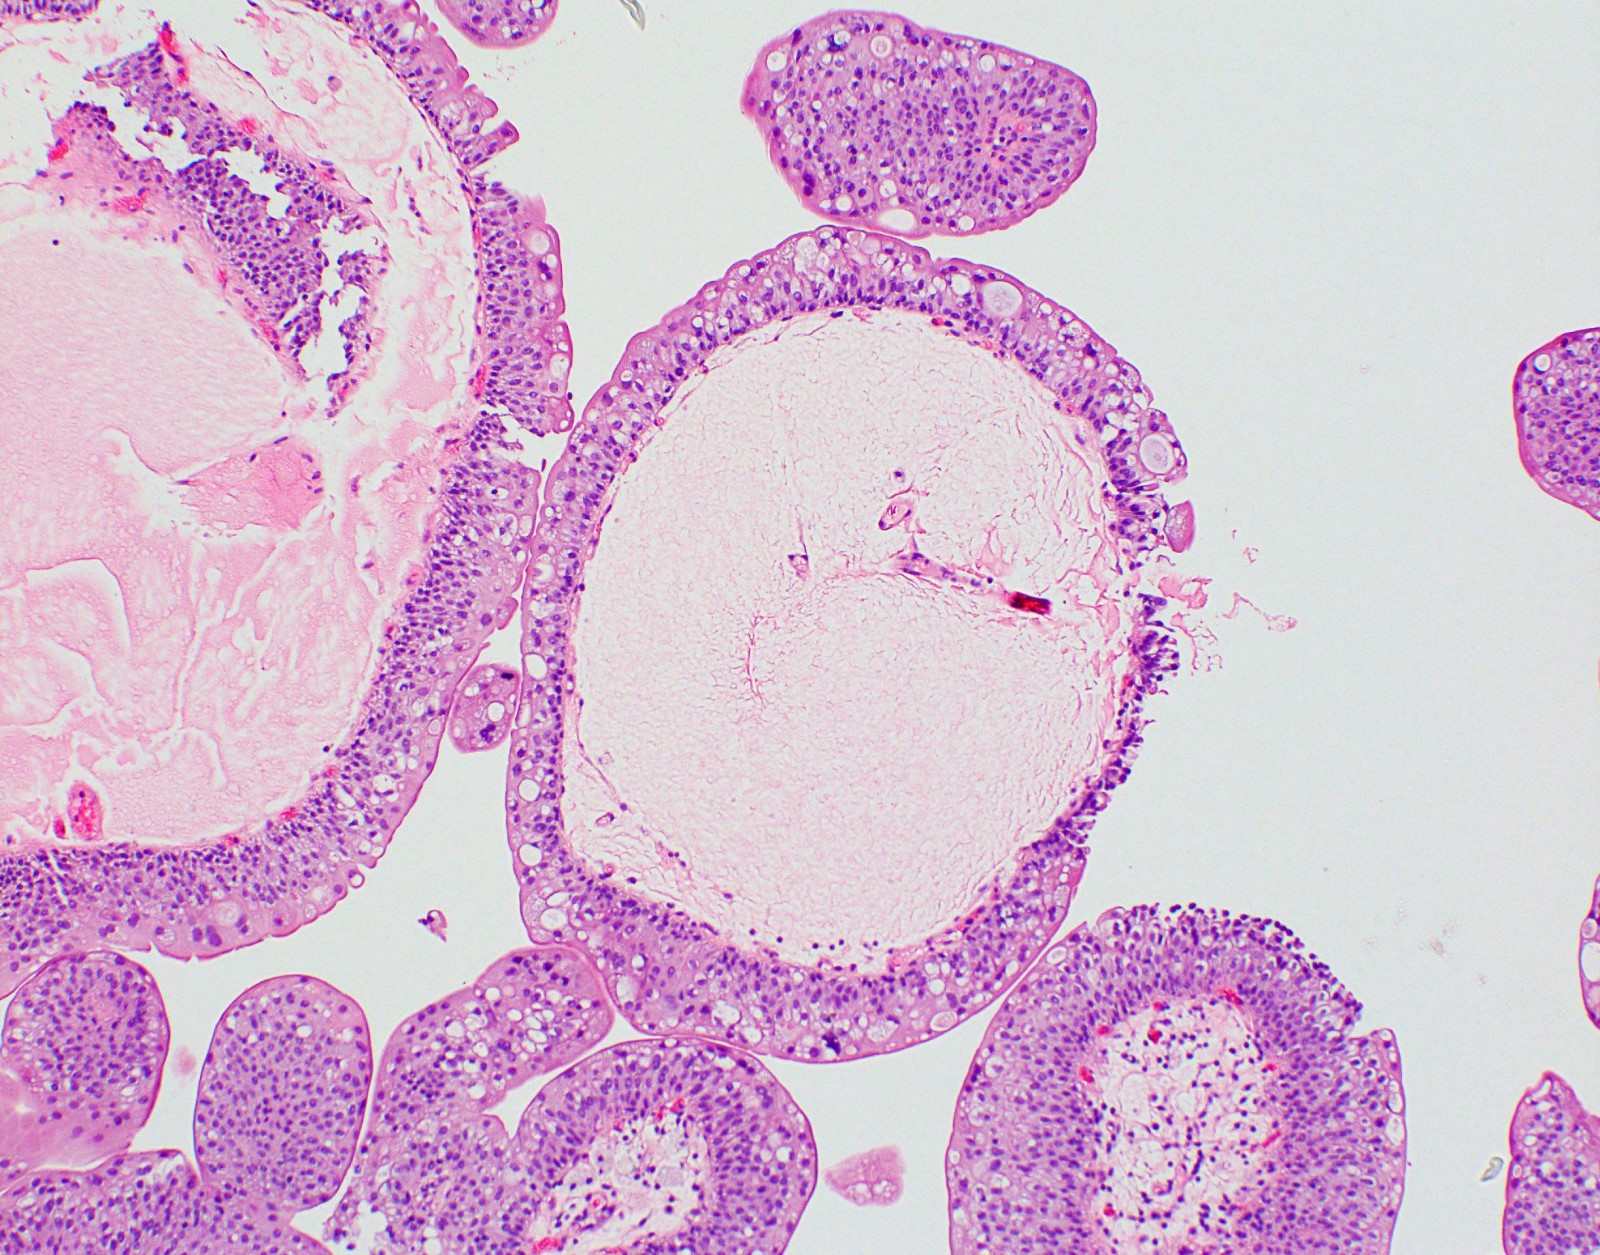 urothelial papilloma p53